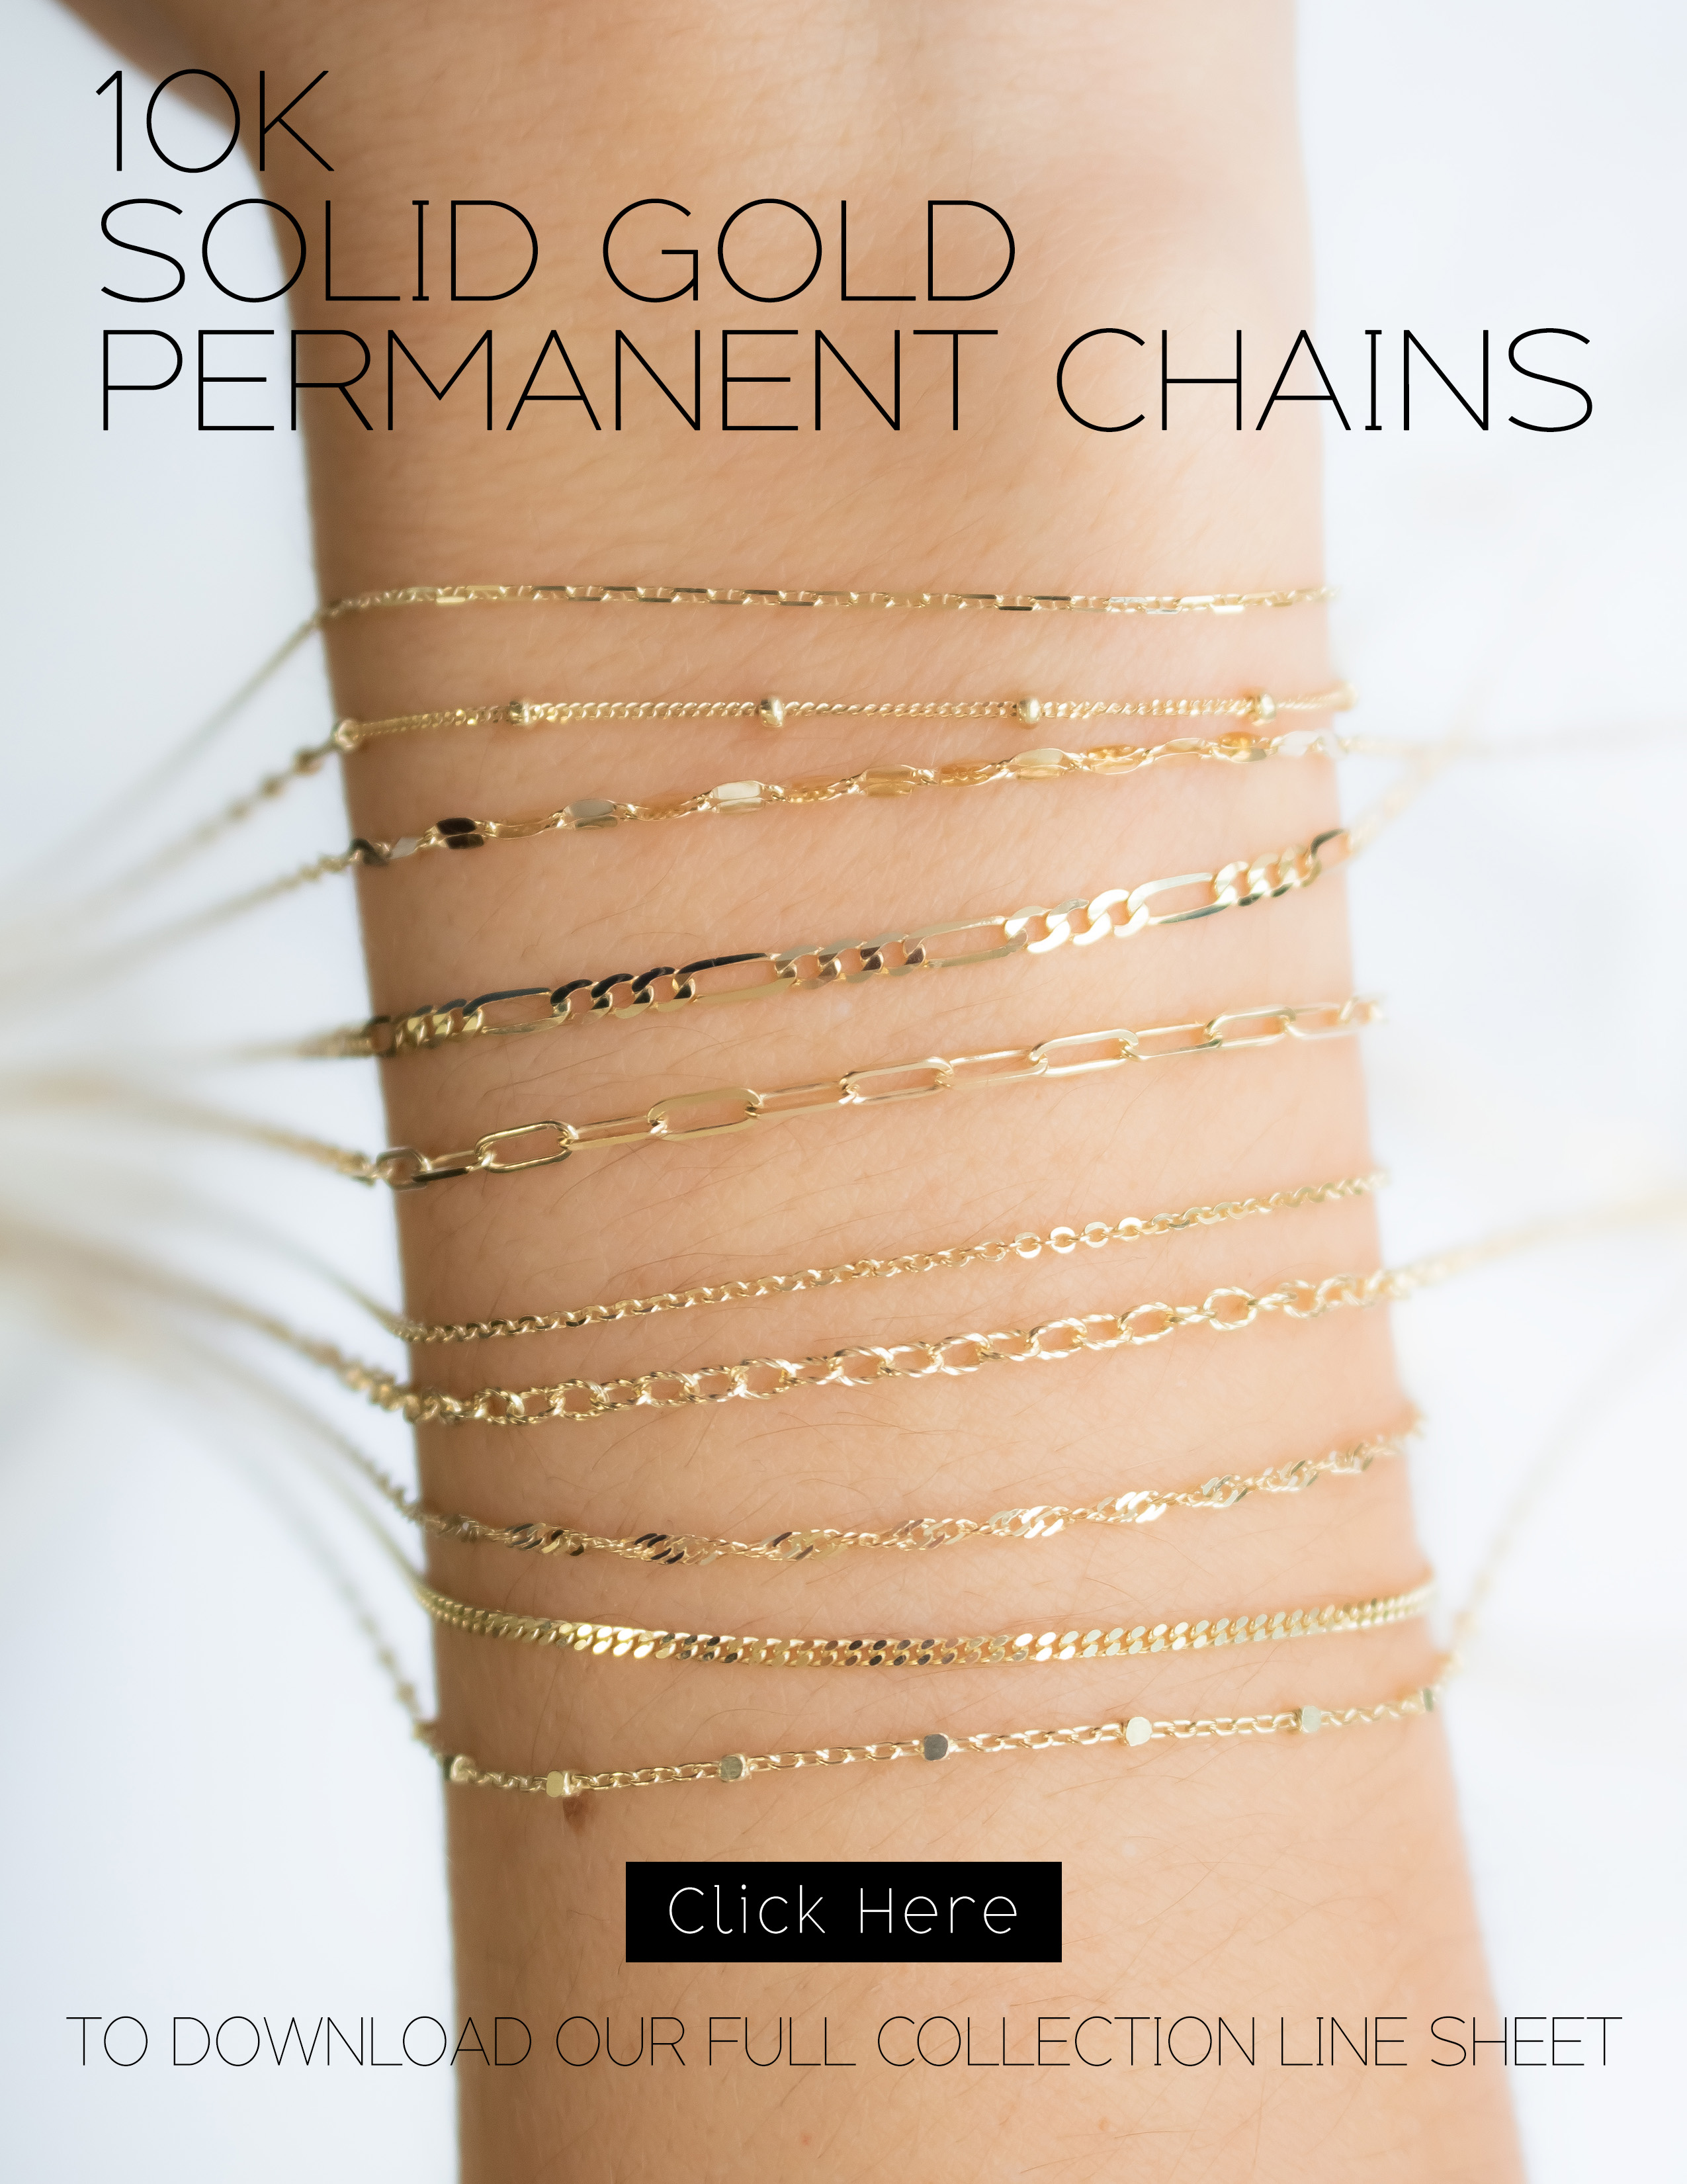 Permanent Chains